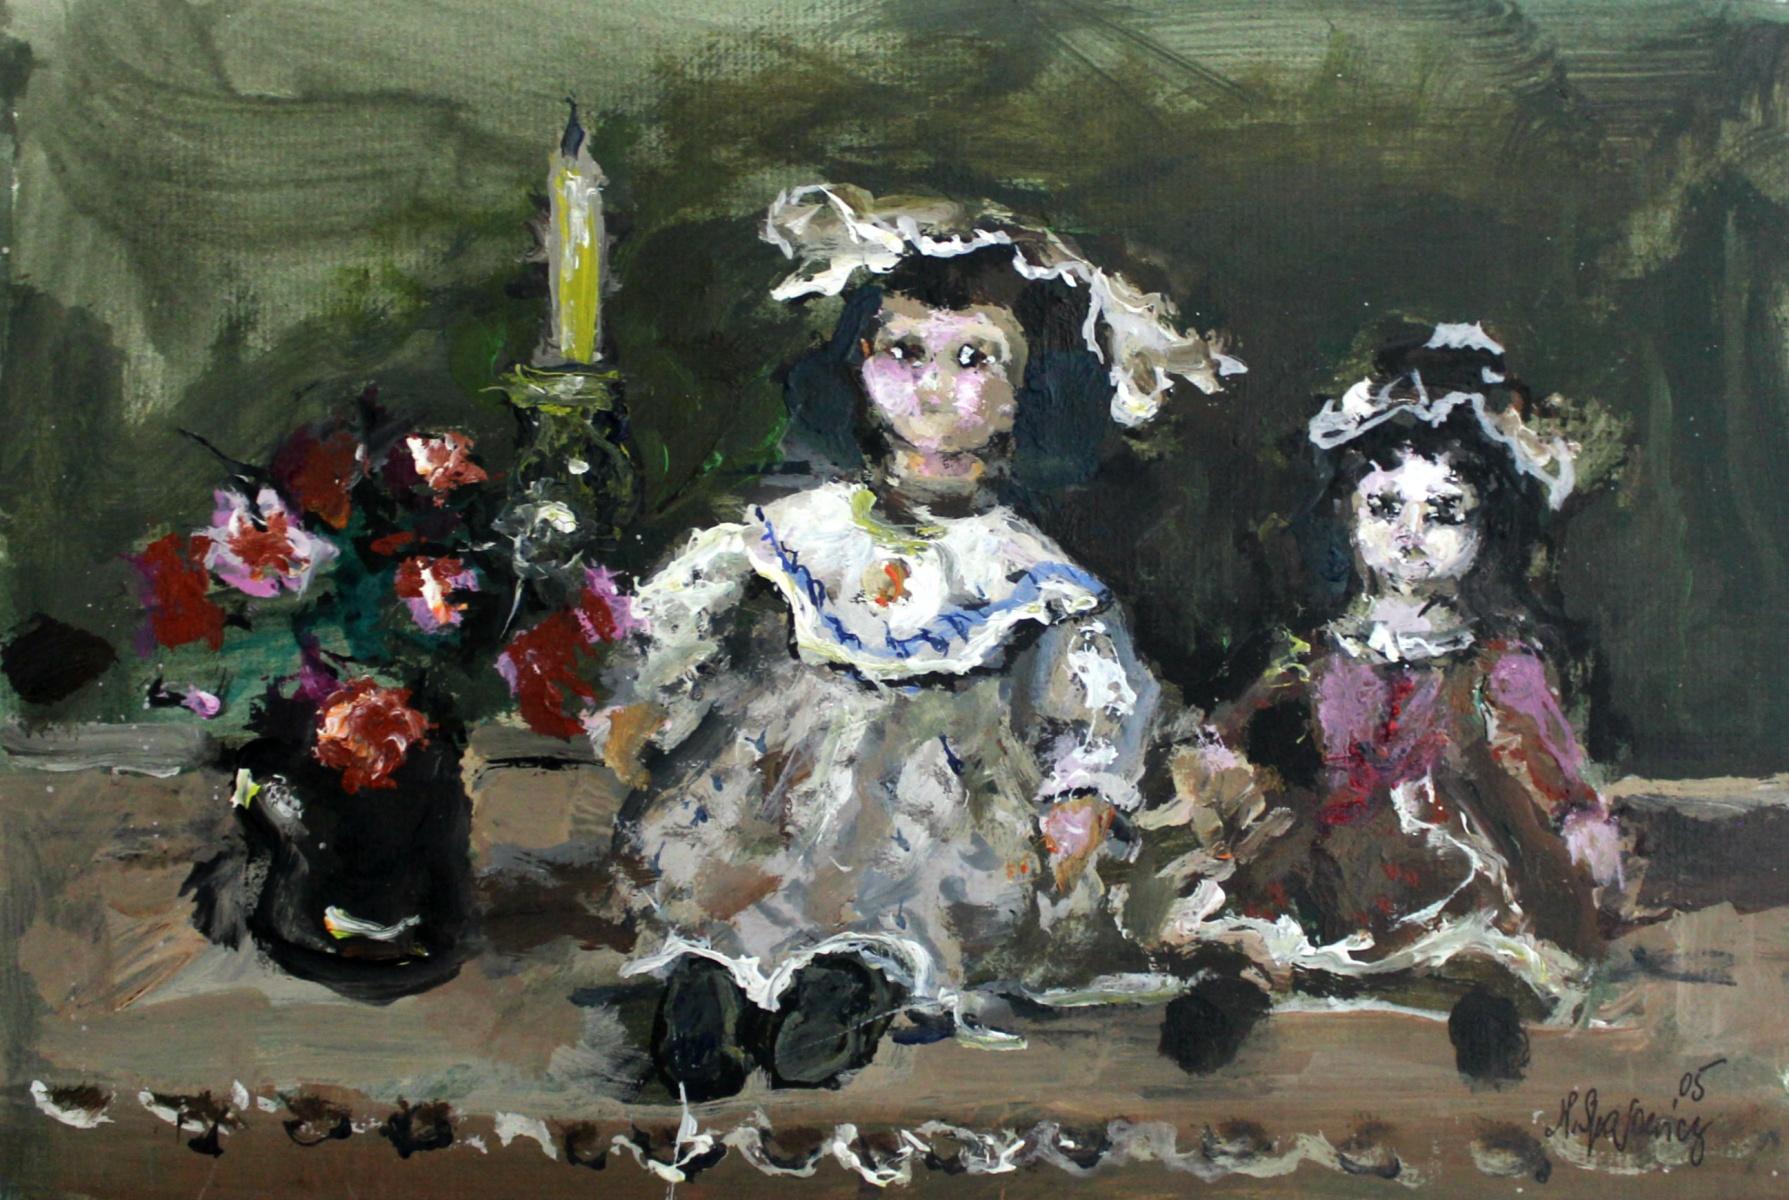 Dolls - 21st century, Oil painting, Figurative, Grey tones, Still life